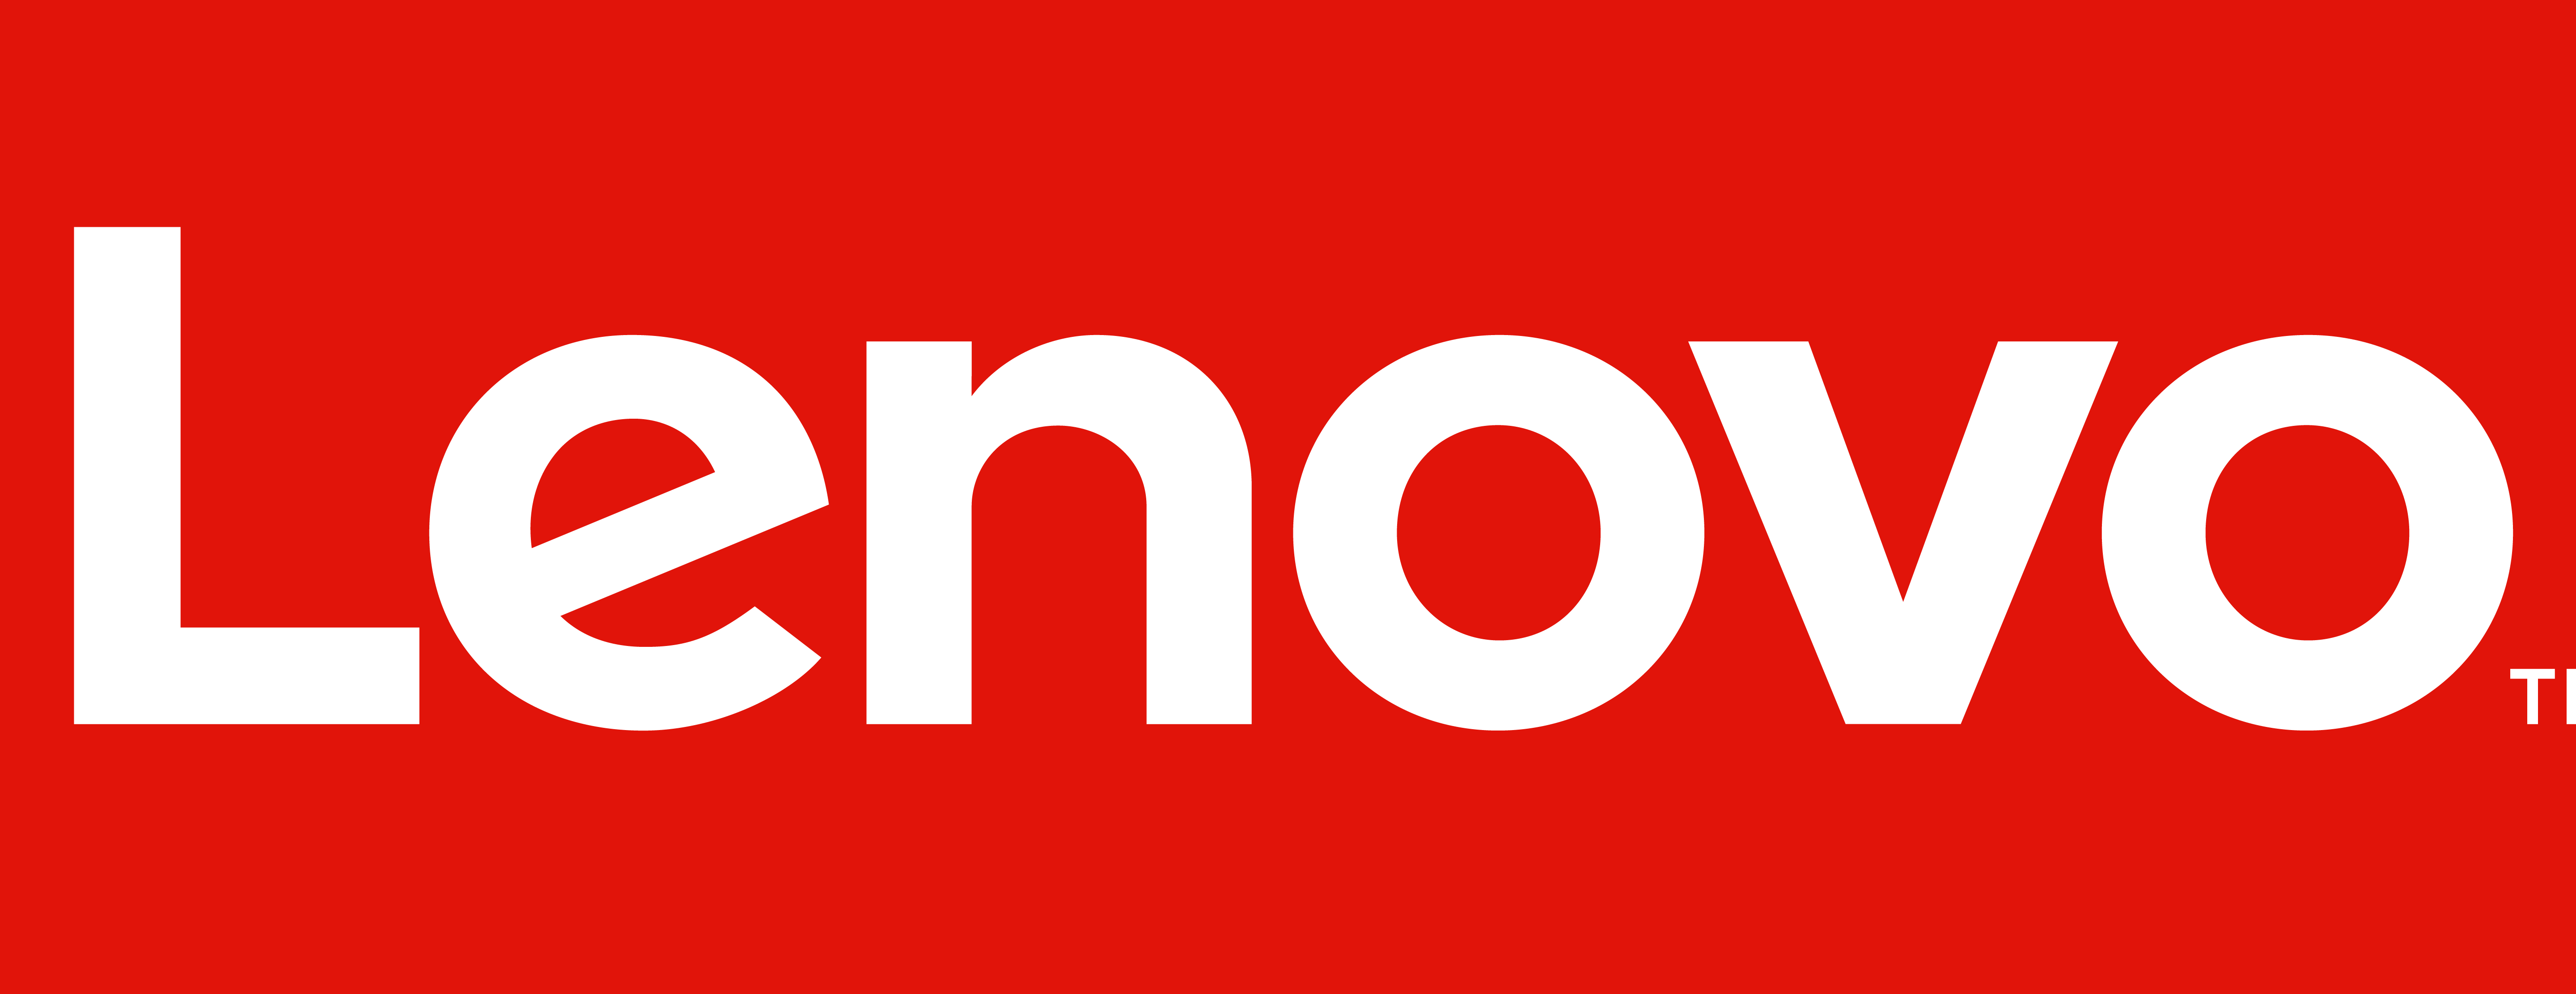 Lenovo Products